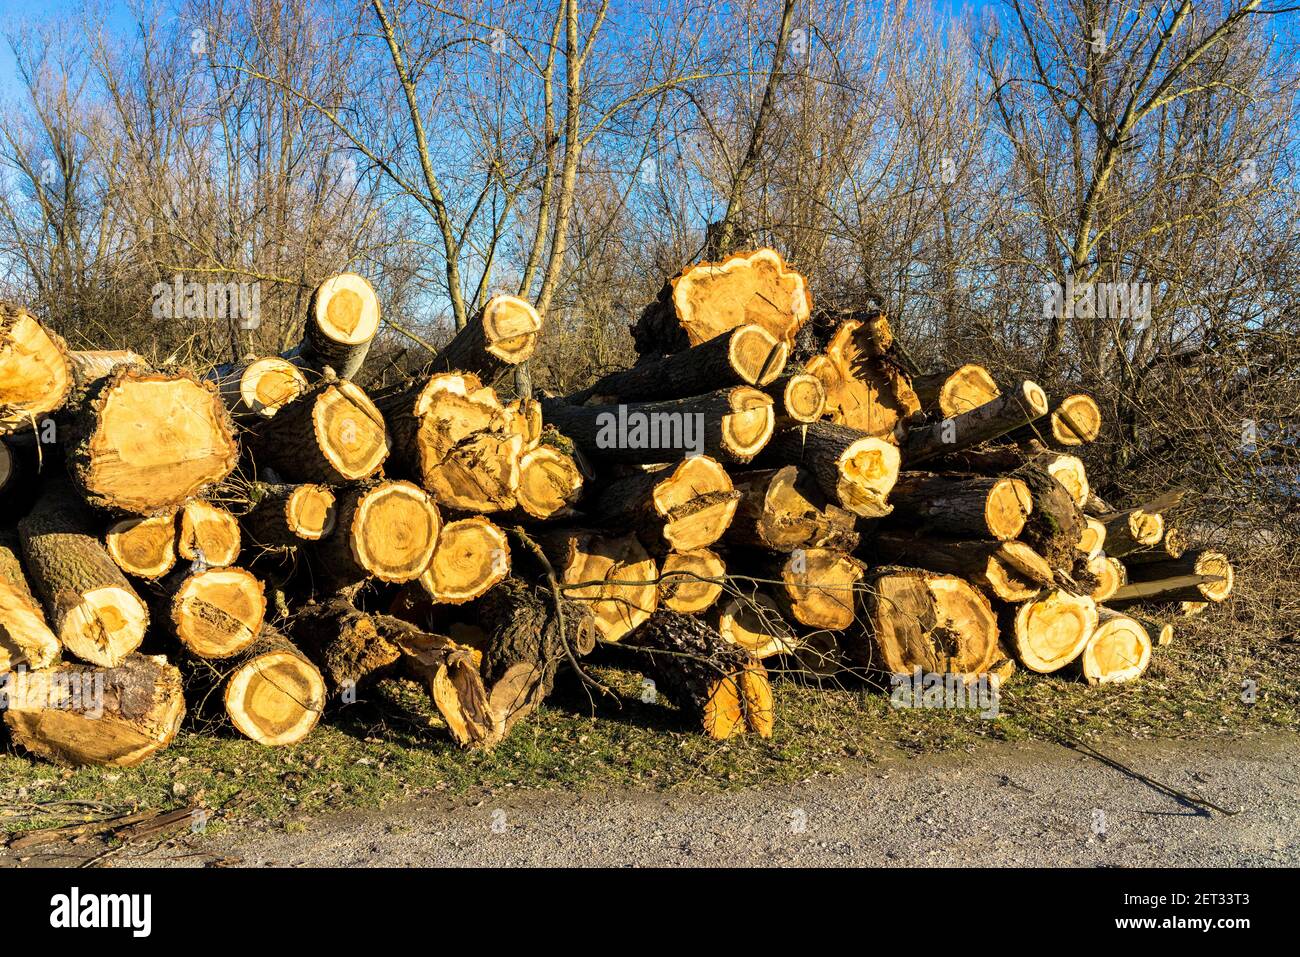 Cut trees Stock Photo